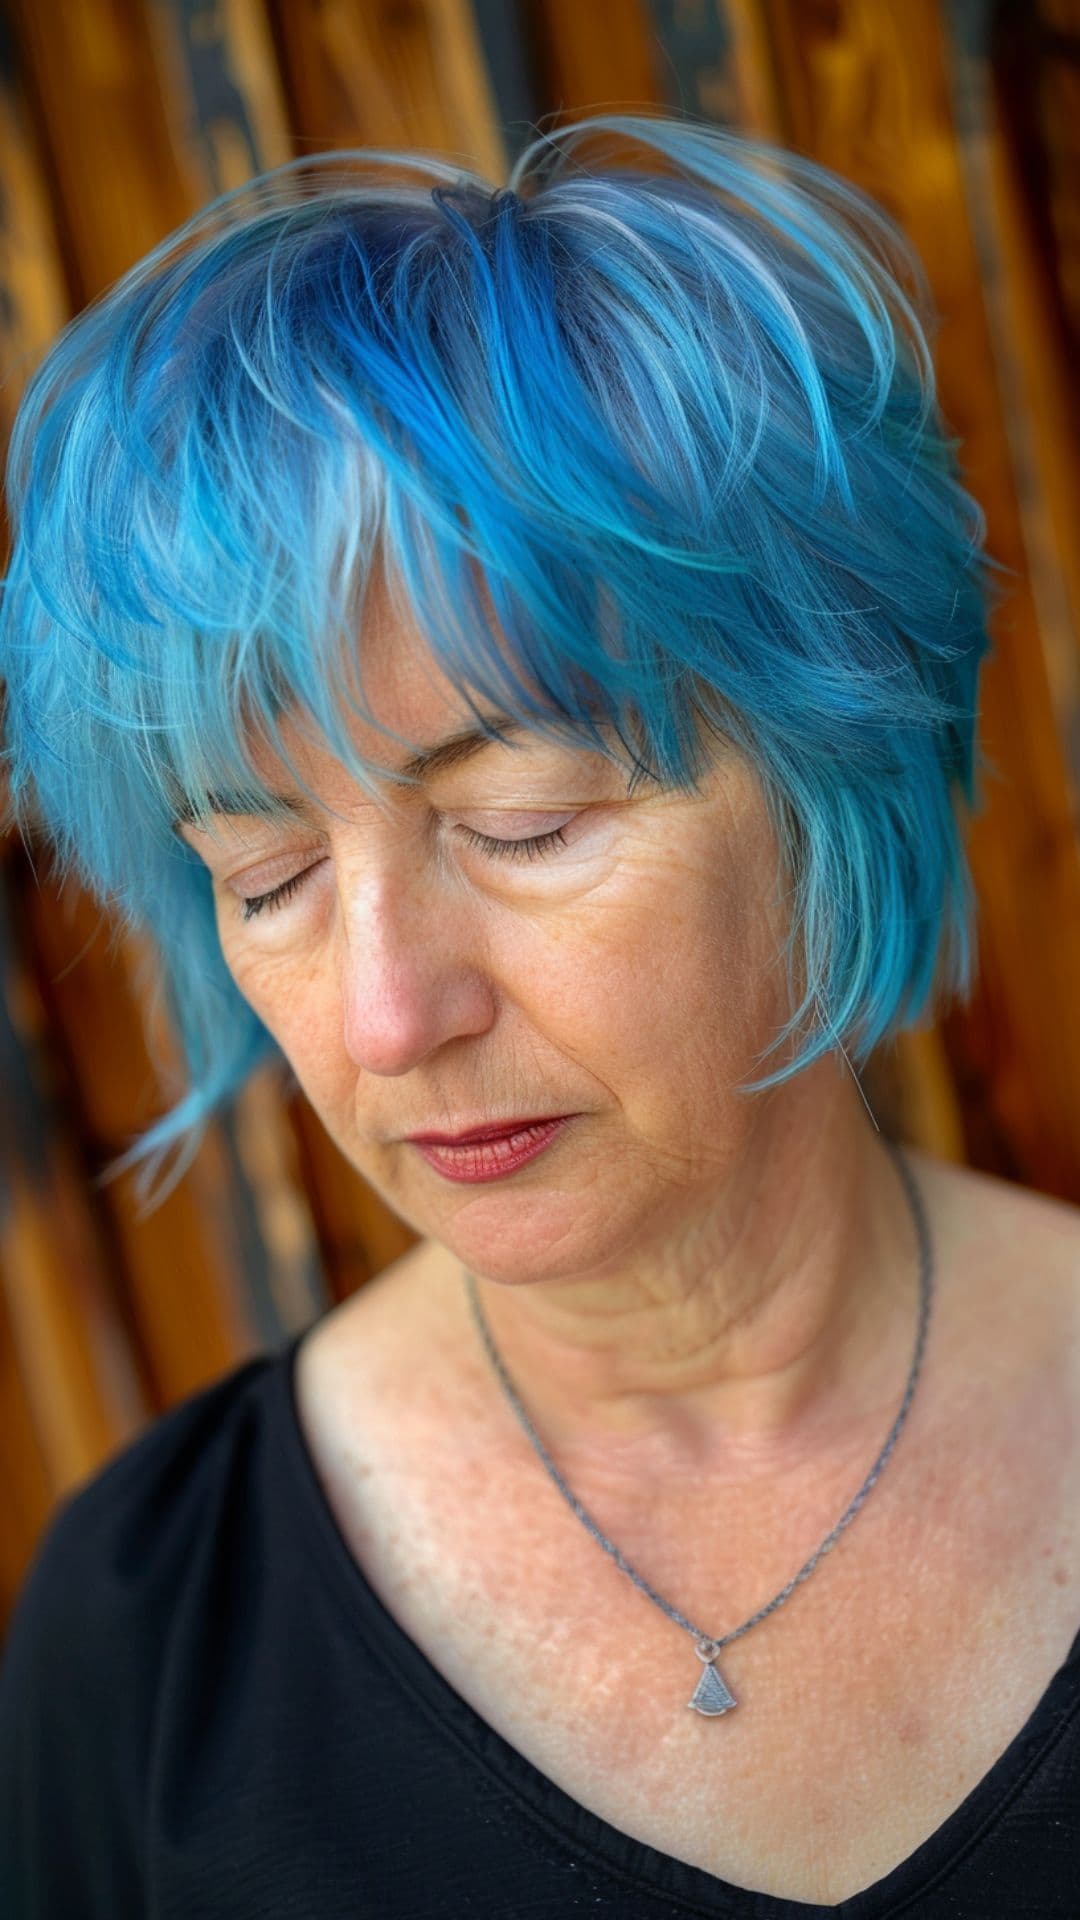 An old woman modelling a blue ocean hair color on pixie bob cut.